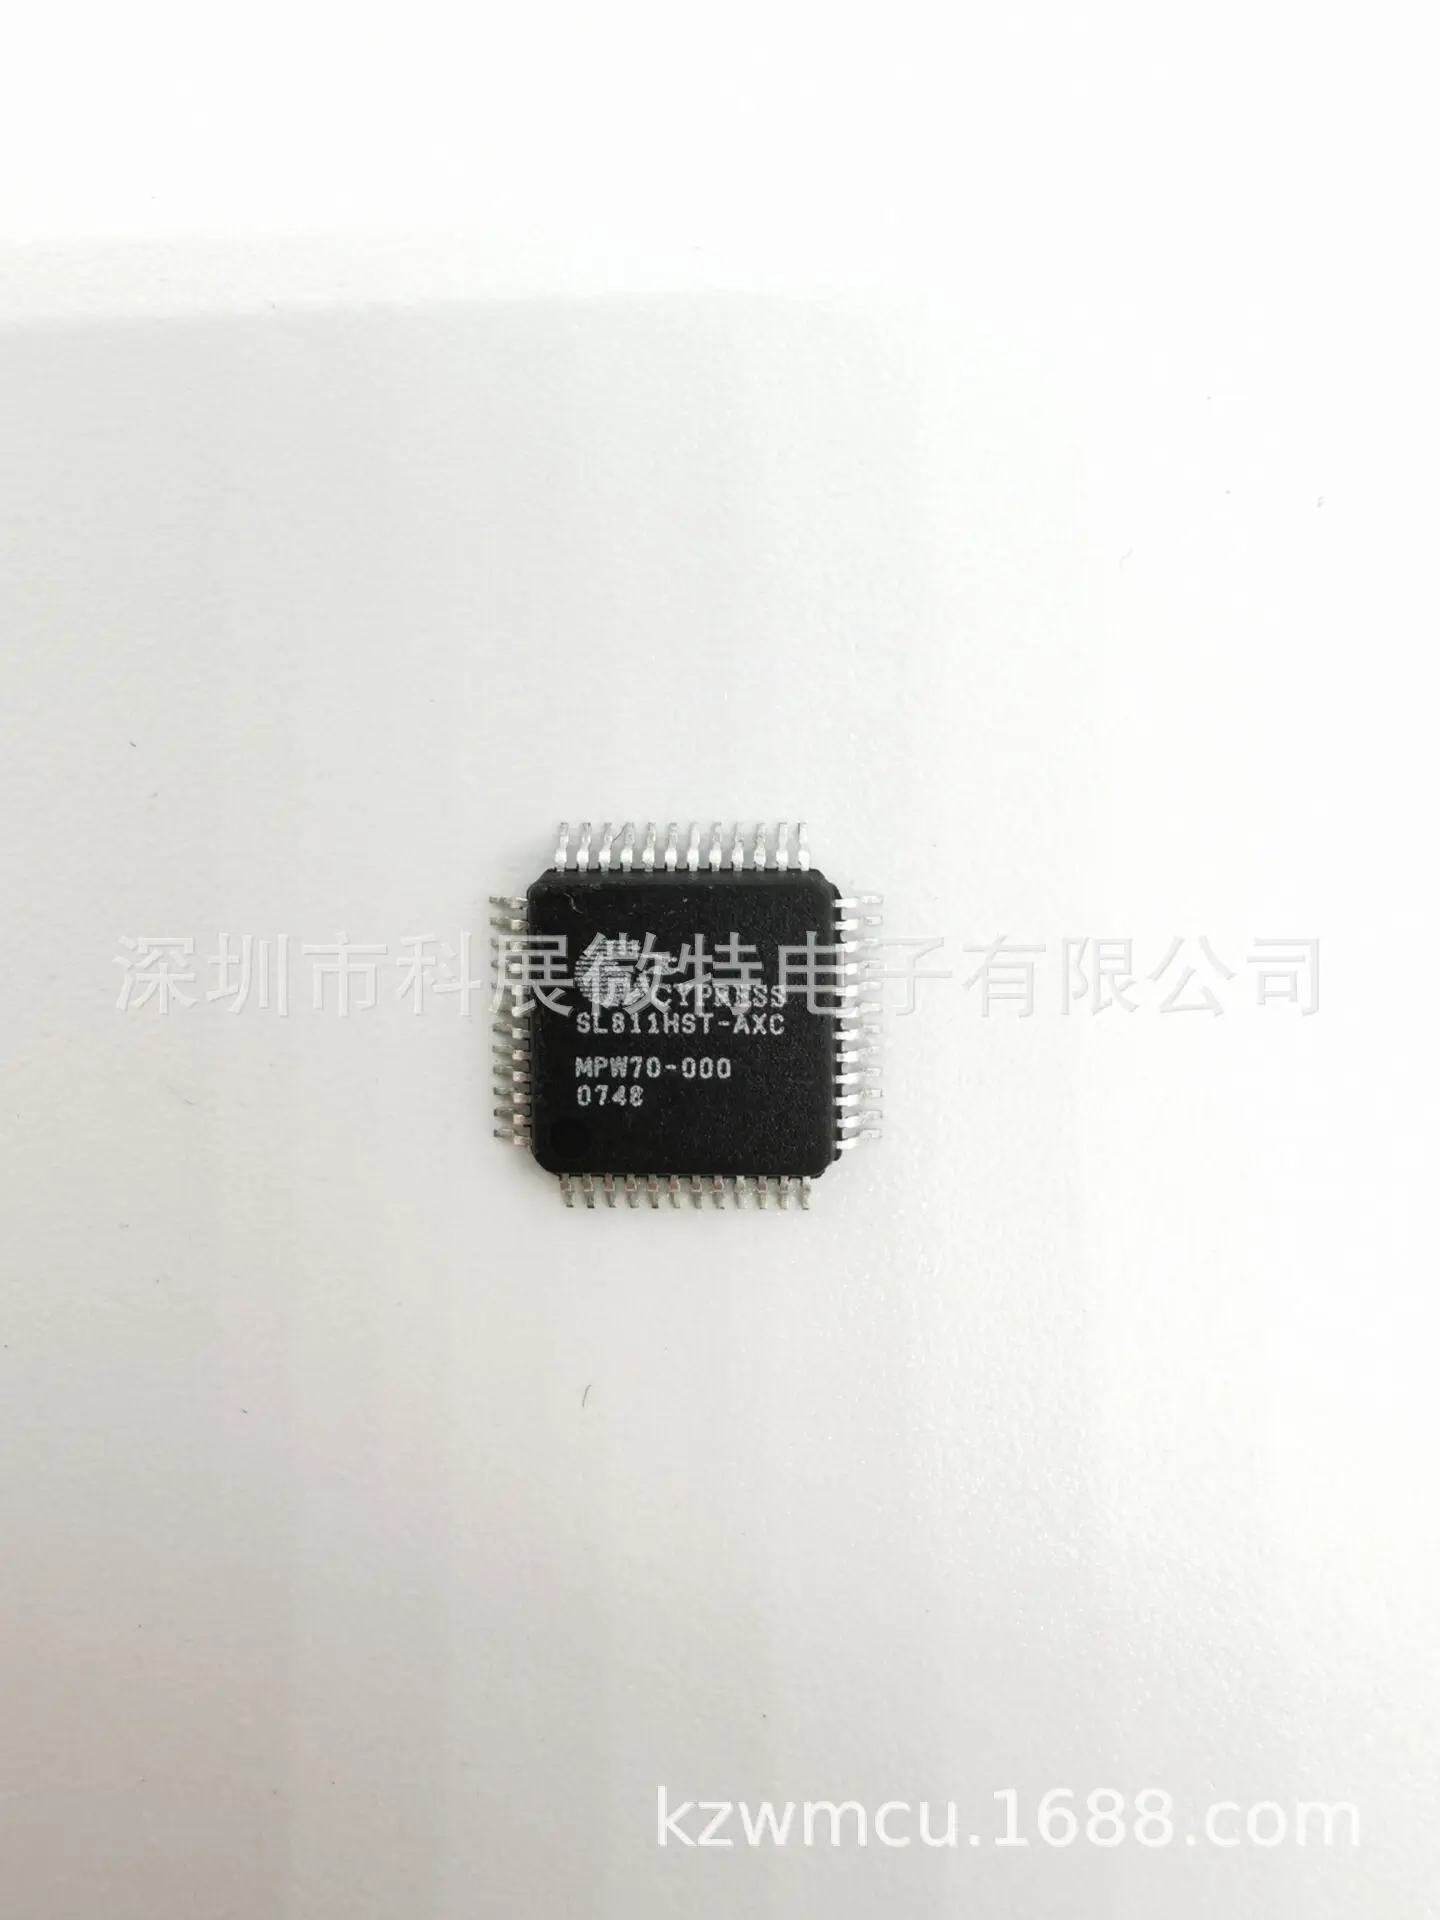 

SL811HST-AXC SL811HST TQFP-48 Integrated chip Original New